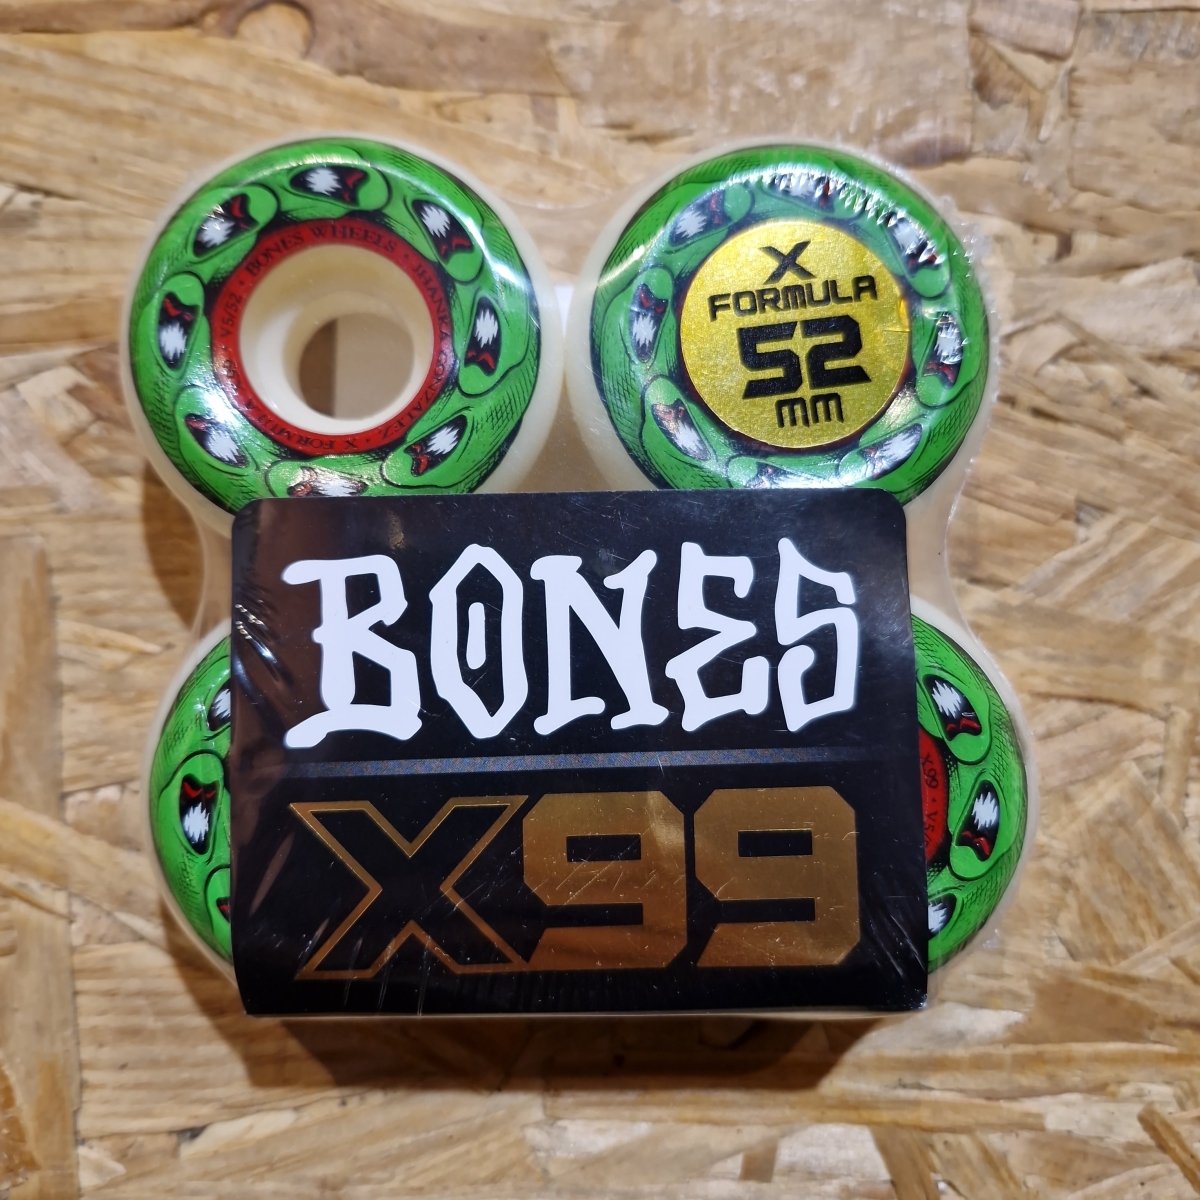 Bones X-Formula 99A Jhanka Gonzalez 52mm V5 Sidecut Wheels - Skateboard-Rollen - Rollbrett Mission